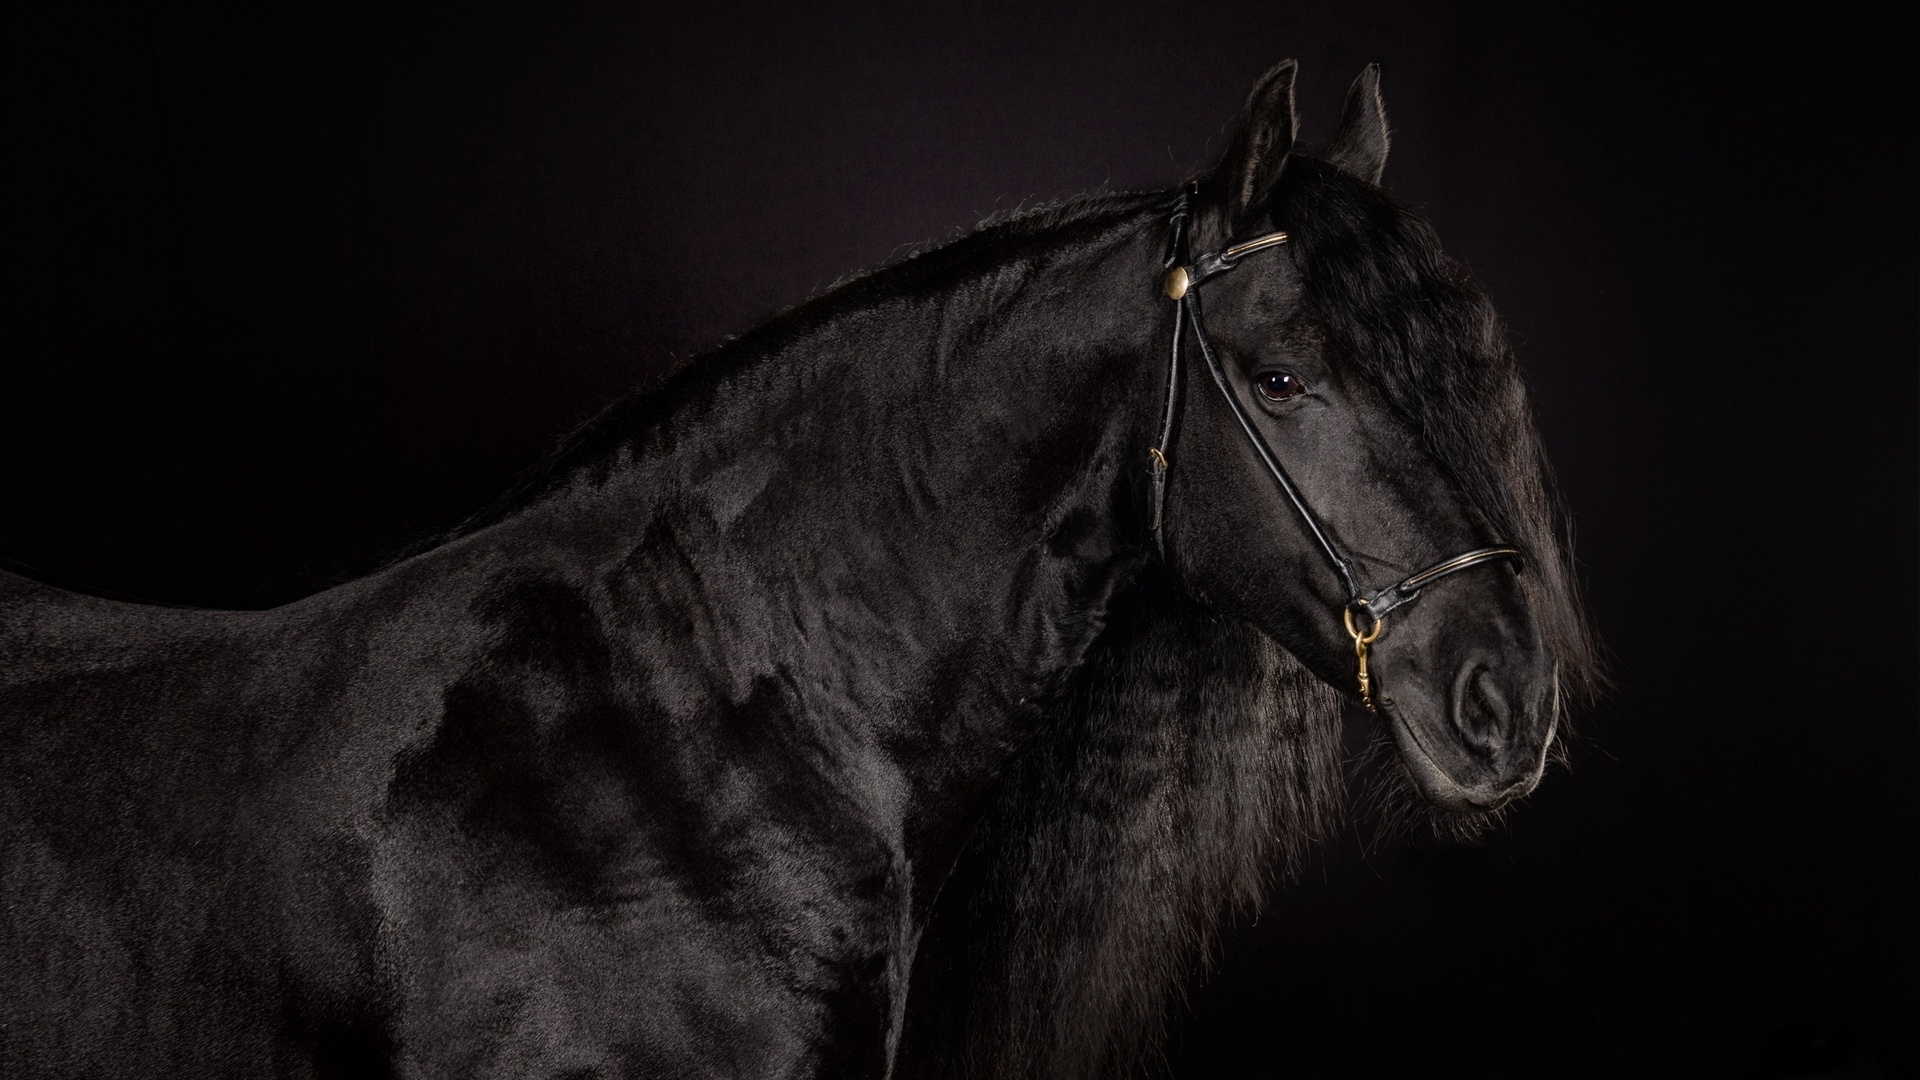 Black horse portrait free image - № 36657